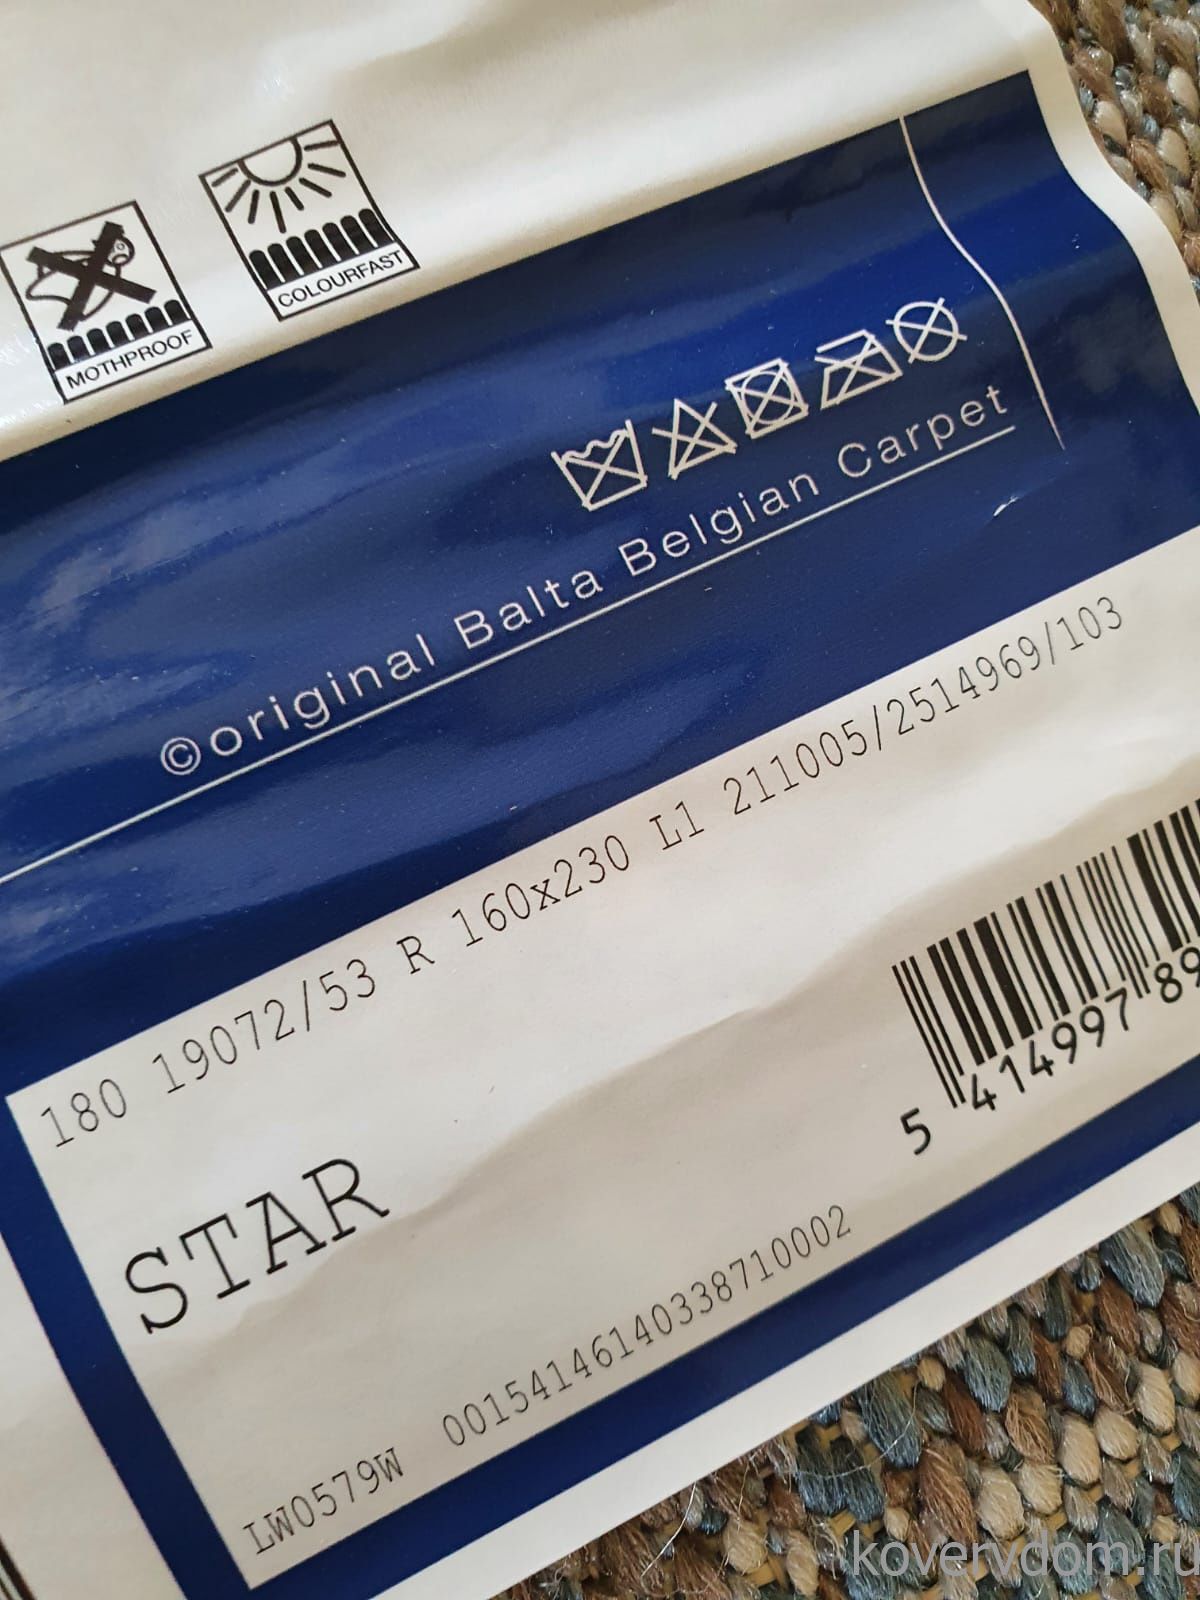 Ковер-циновка STAR 19072 053 Винтажный